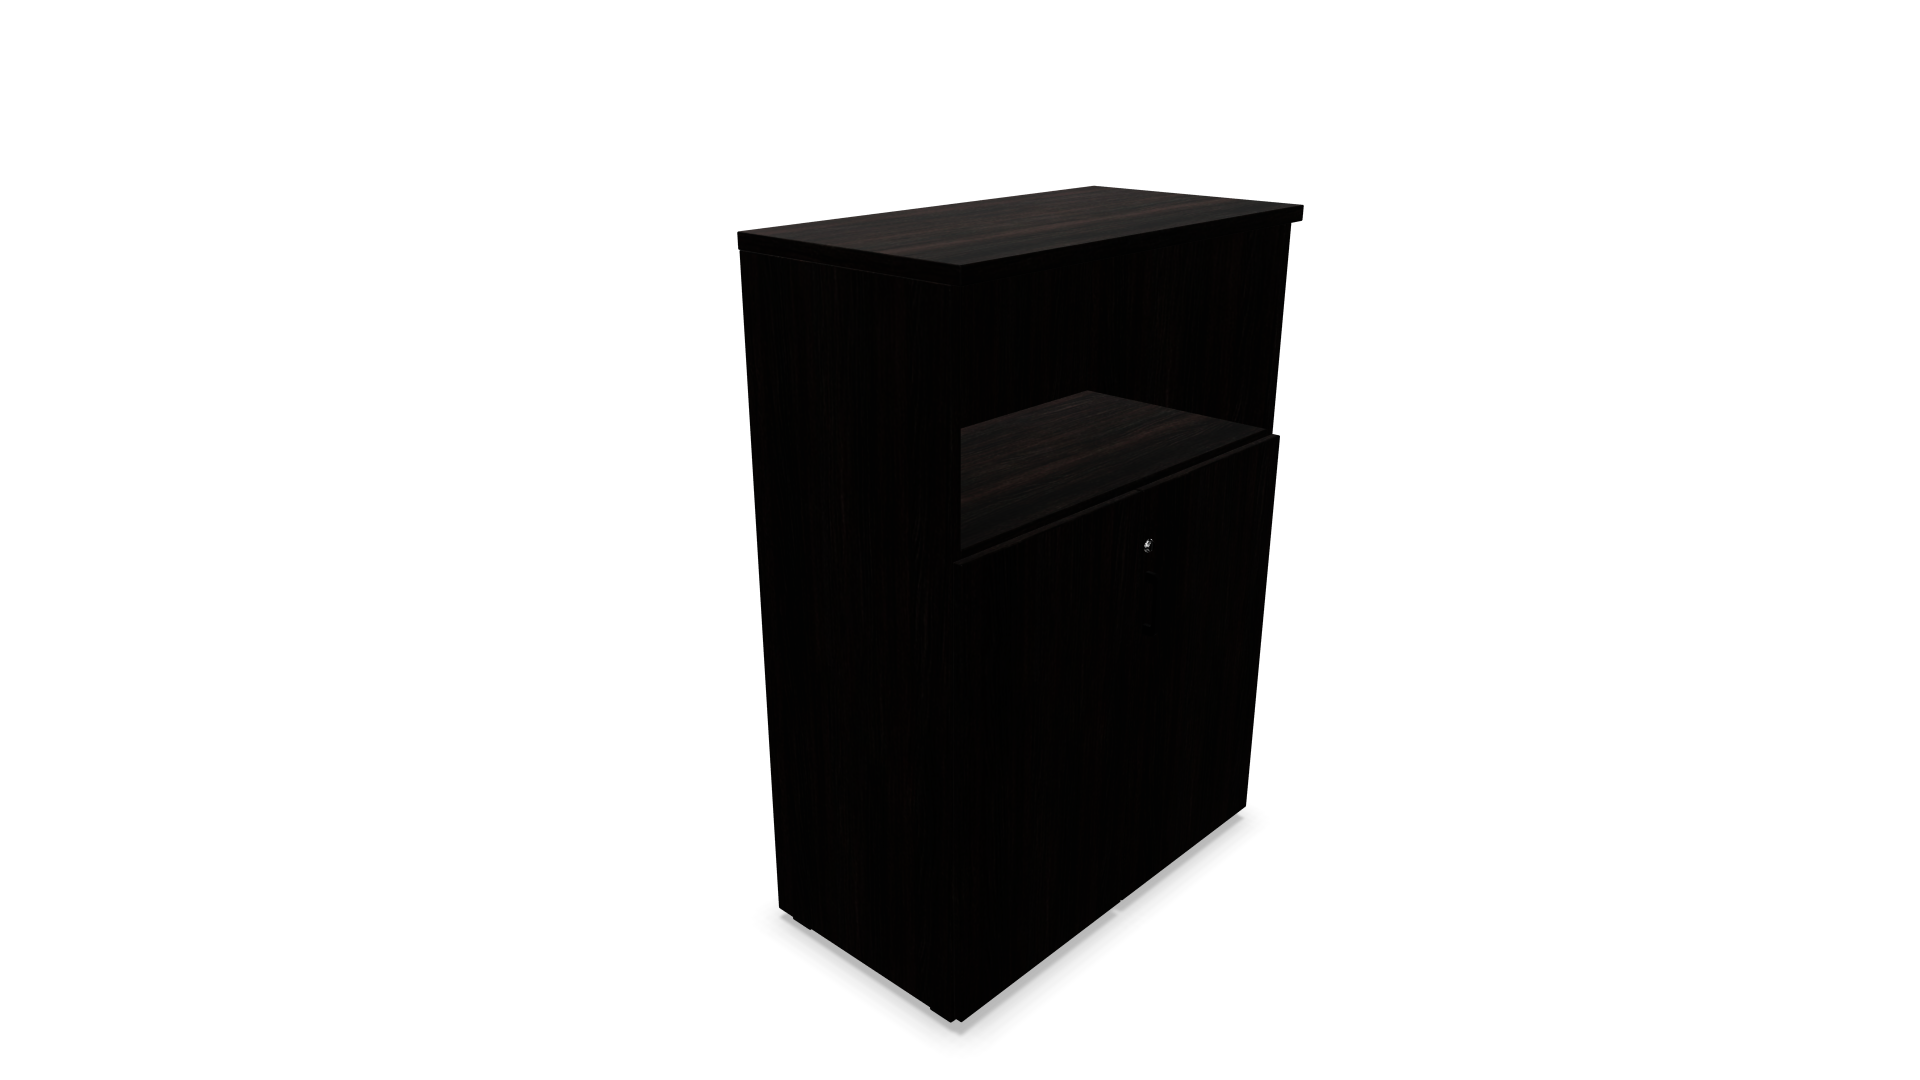 Actiu Modular AR83 Series Storage Cabinet